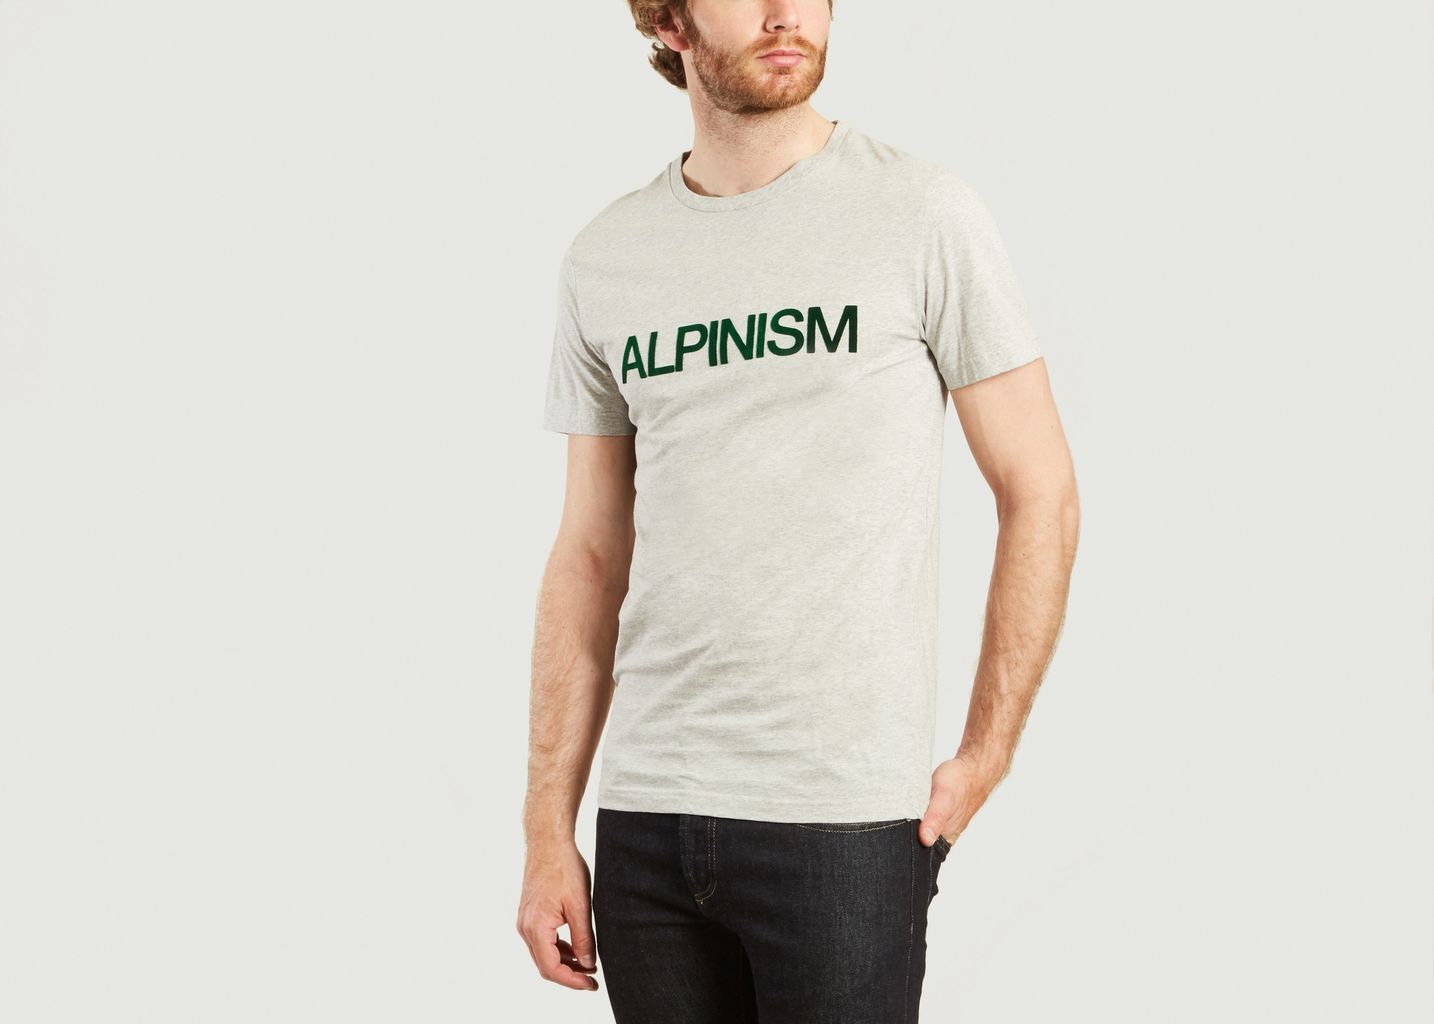 Alpinism T-shirt - Ron Dorff